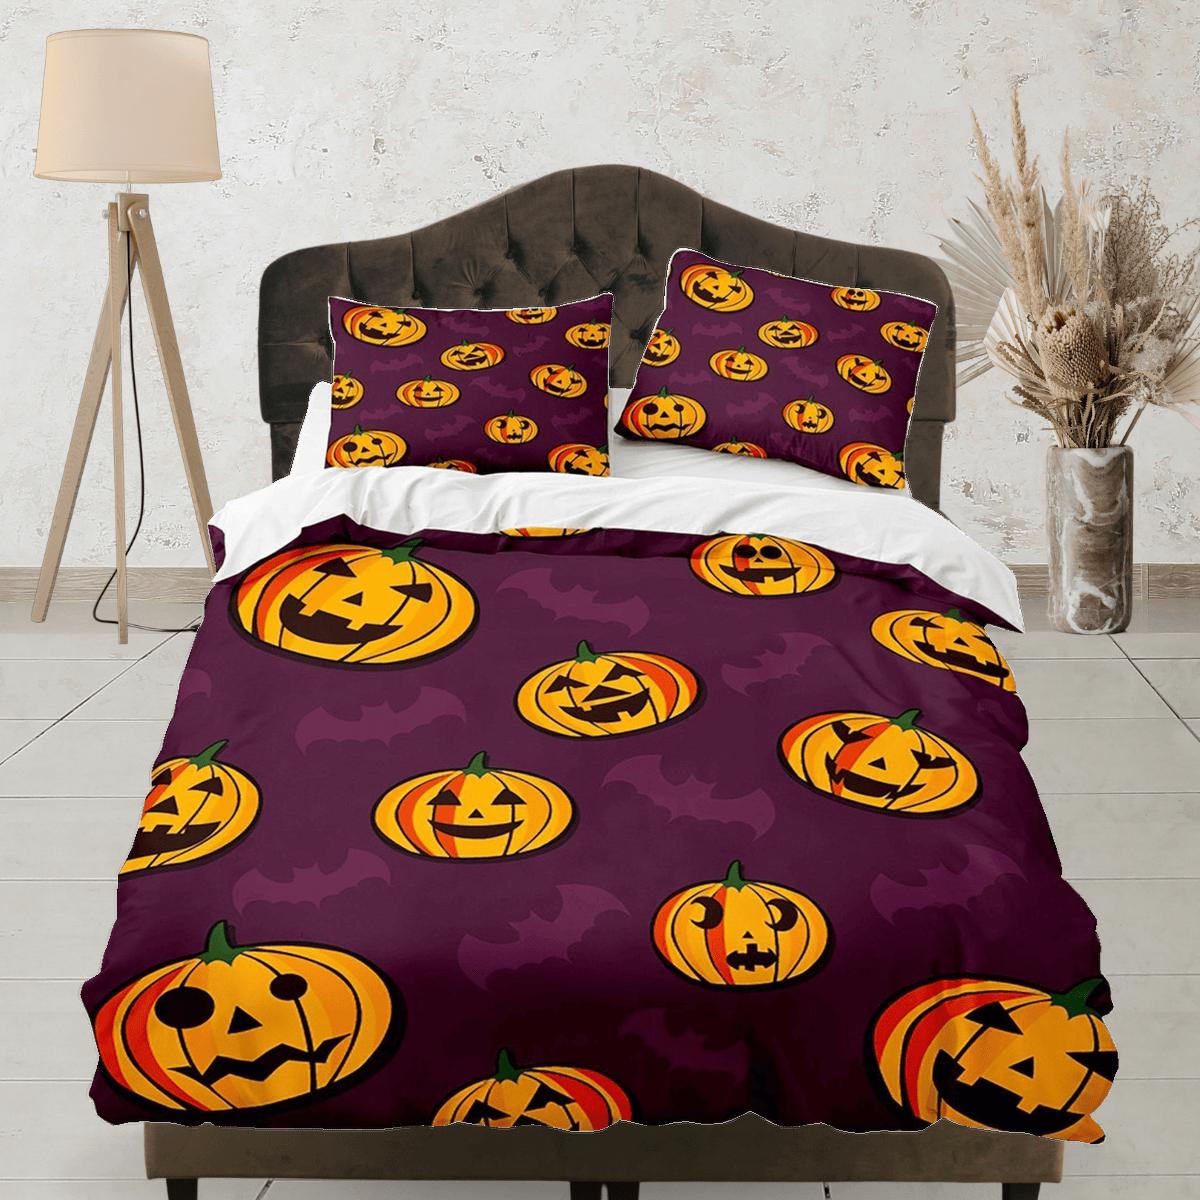 daintyduvet Pumpkin and bat halloween bedding & pillowcase, violet duvet cover set dorm bedding, halloween decor, nursery toddler bedding halloween gift